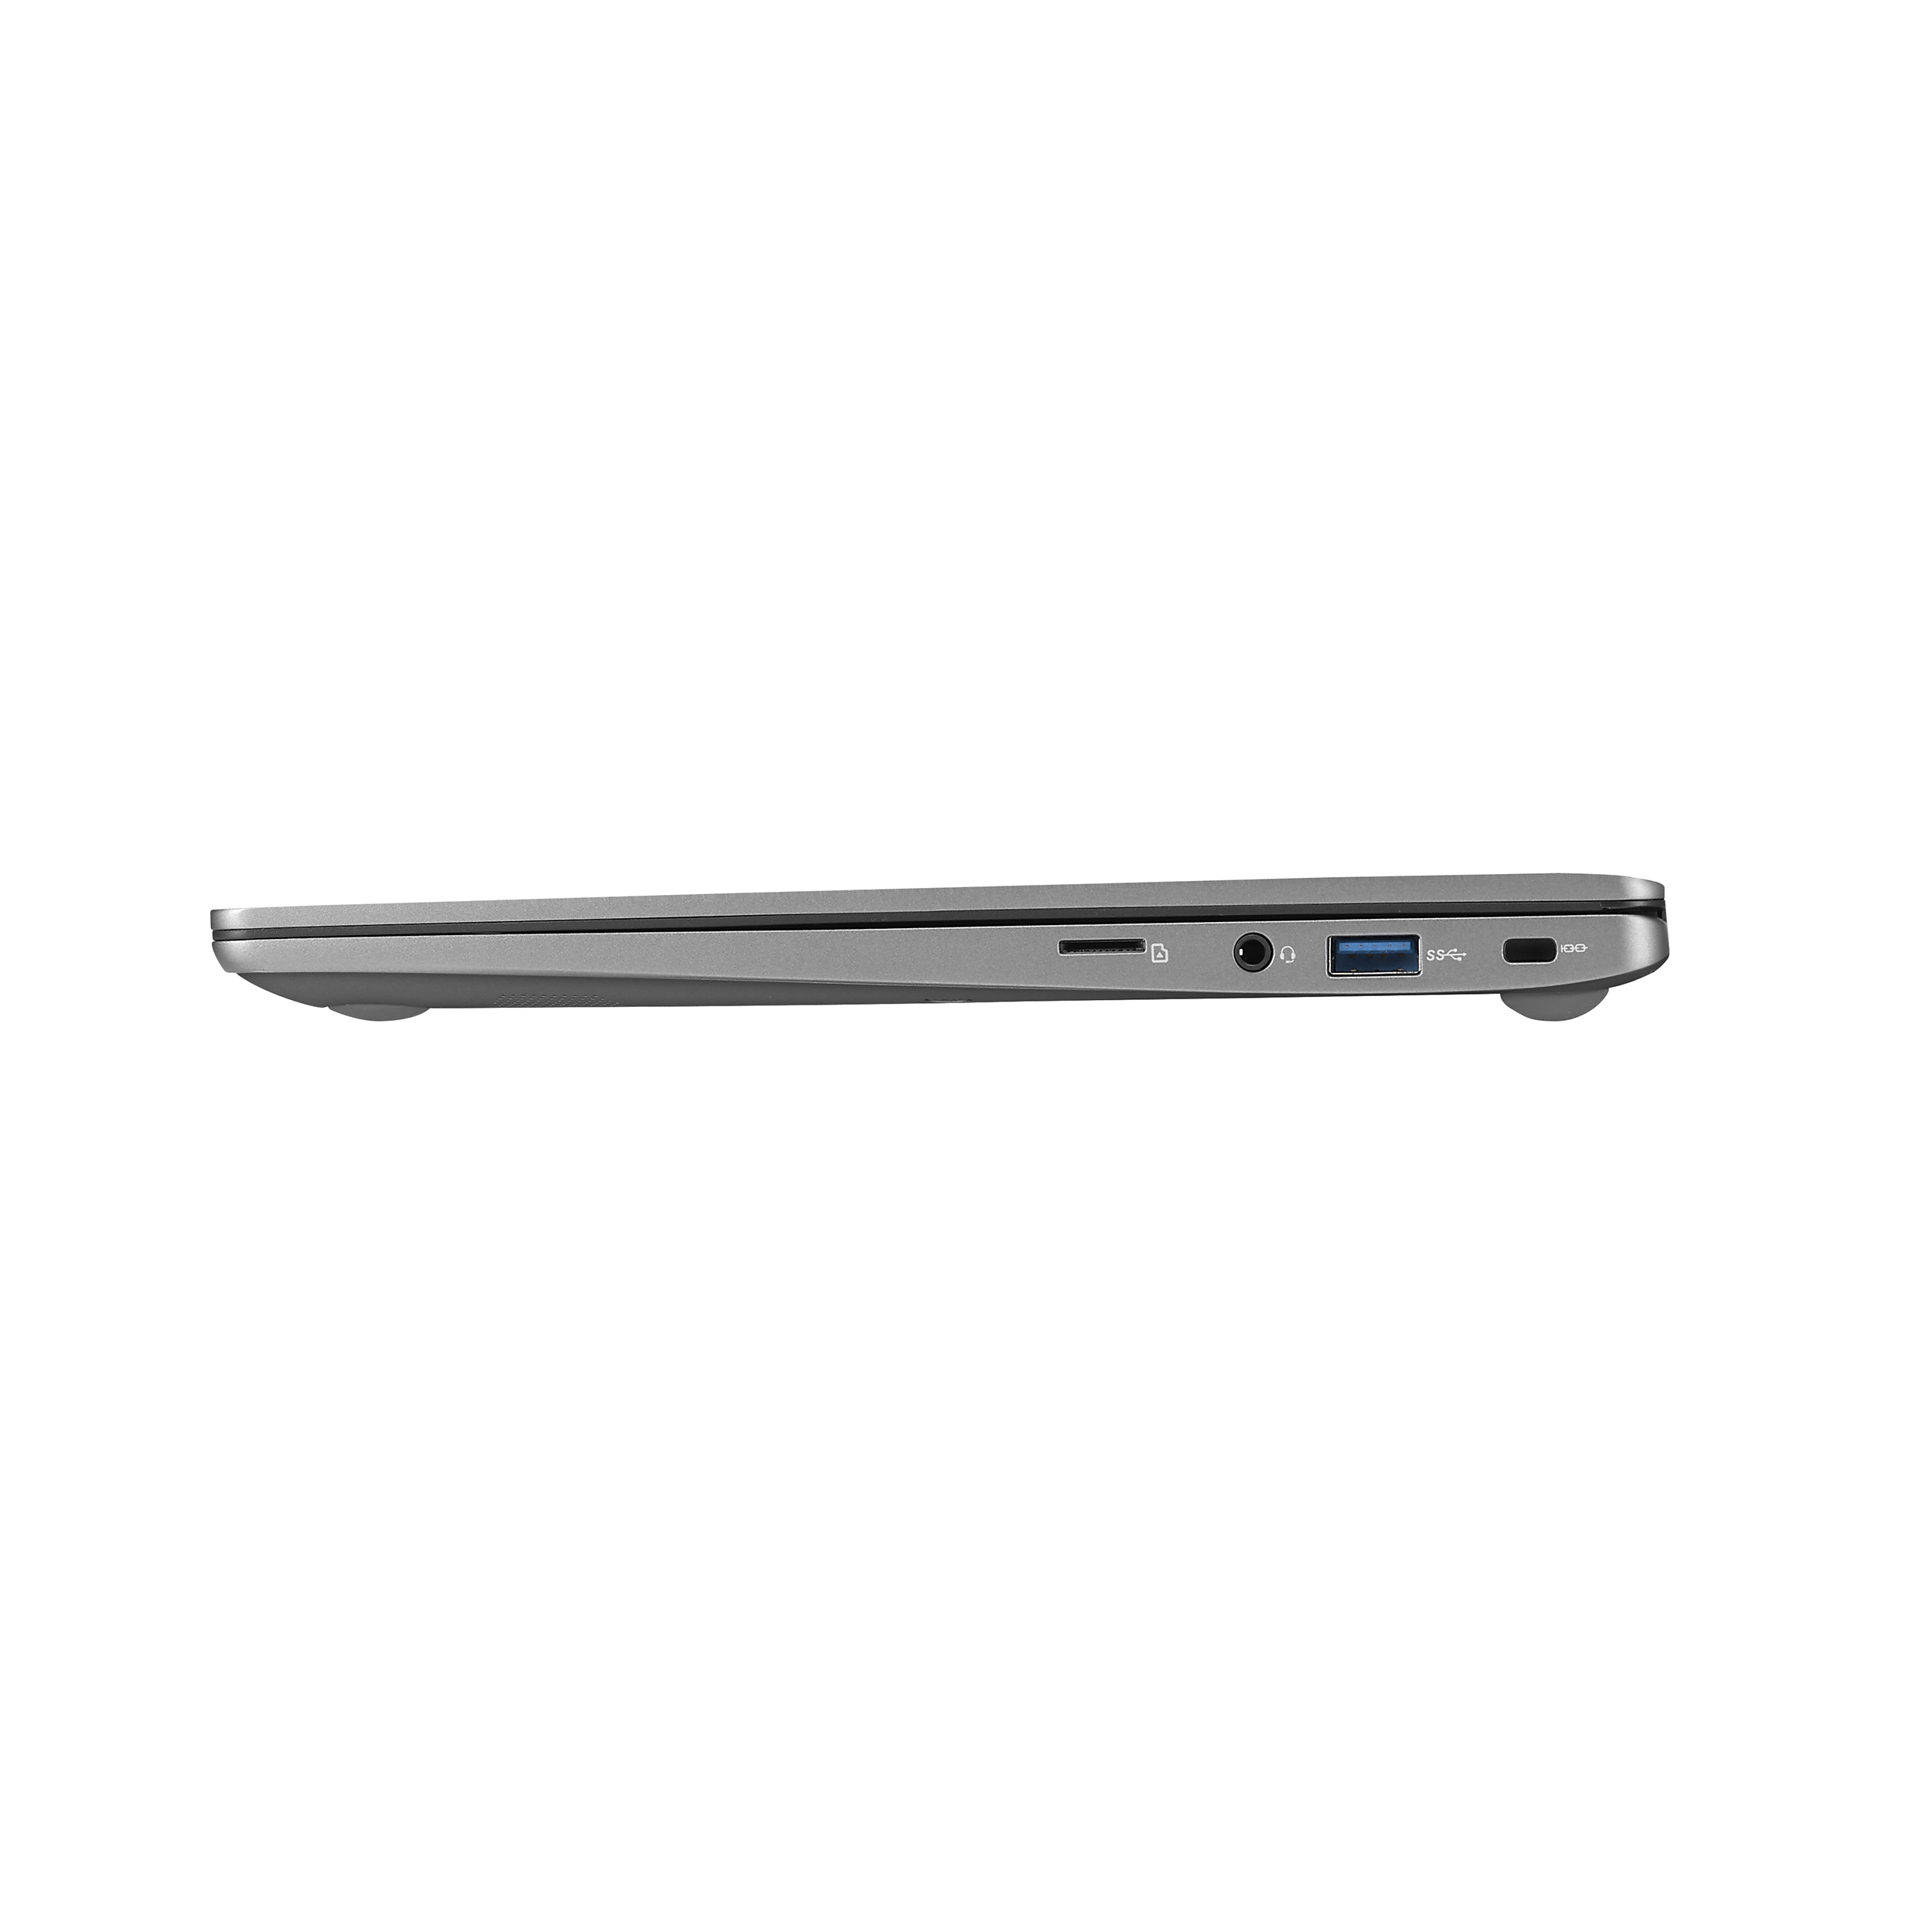 LG gram 14 inch Ultra-Lightweight Laptop with 10th Gen Intel Core Processor w/Intel Iris Plus - 14Z90N-U.AAS7U1 - image 8 of 13